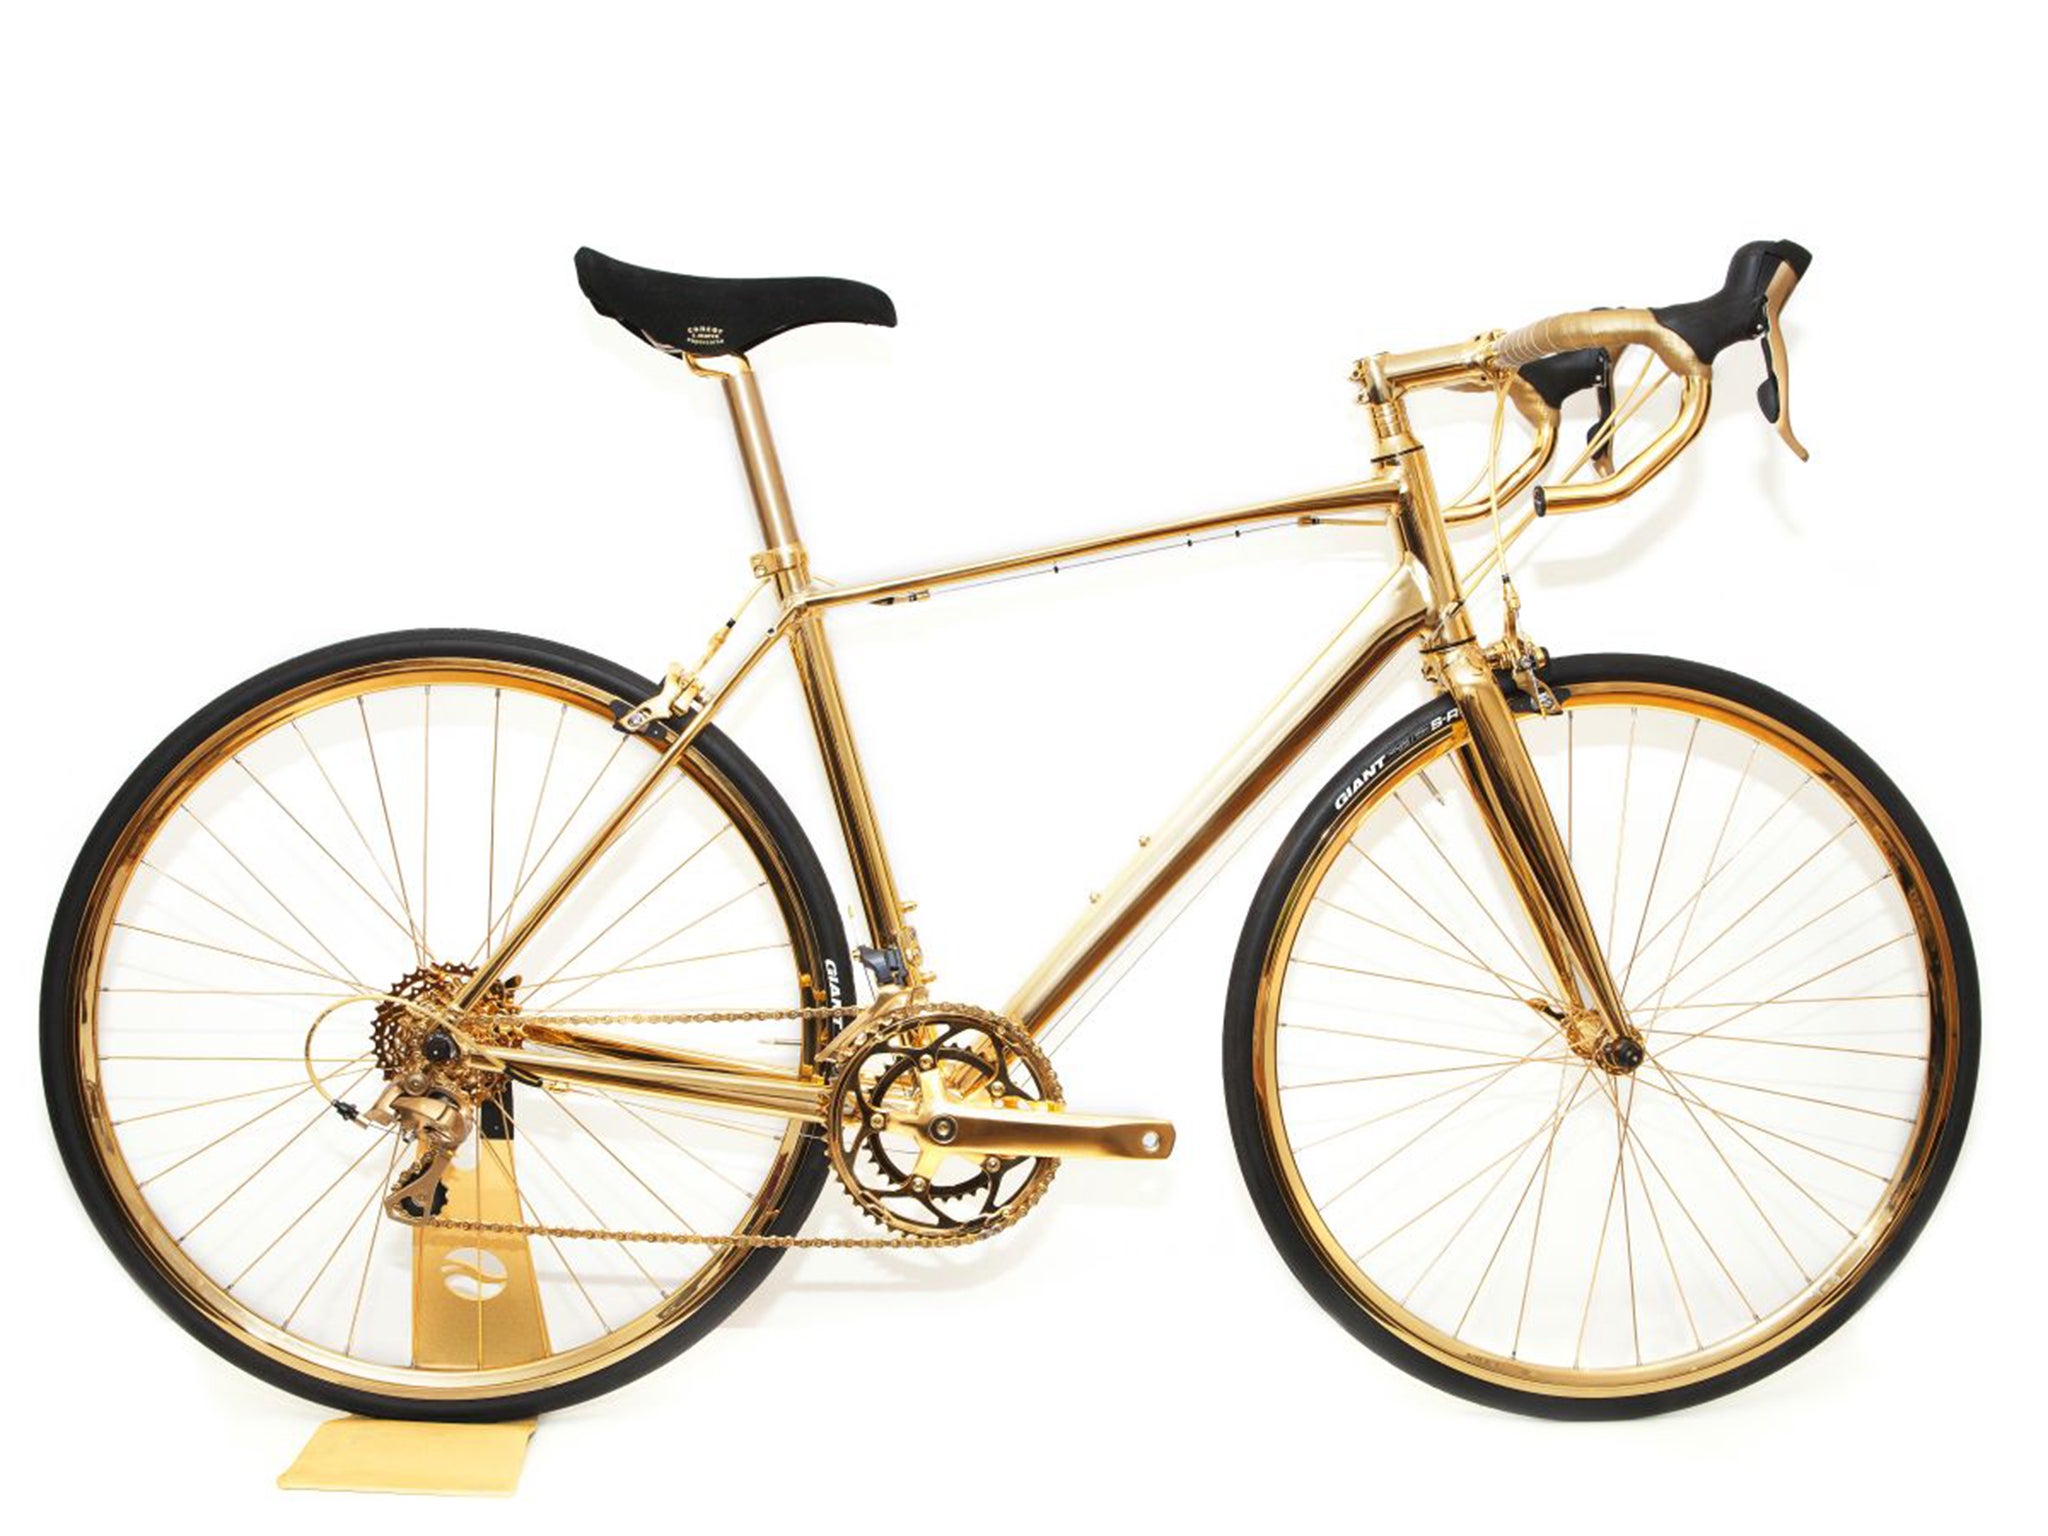 The Goldgenie golden bike